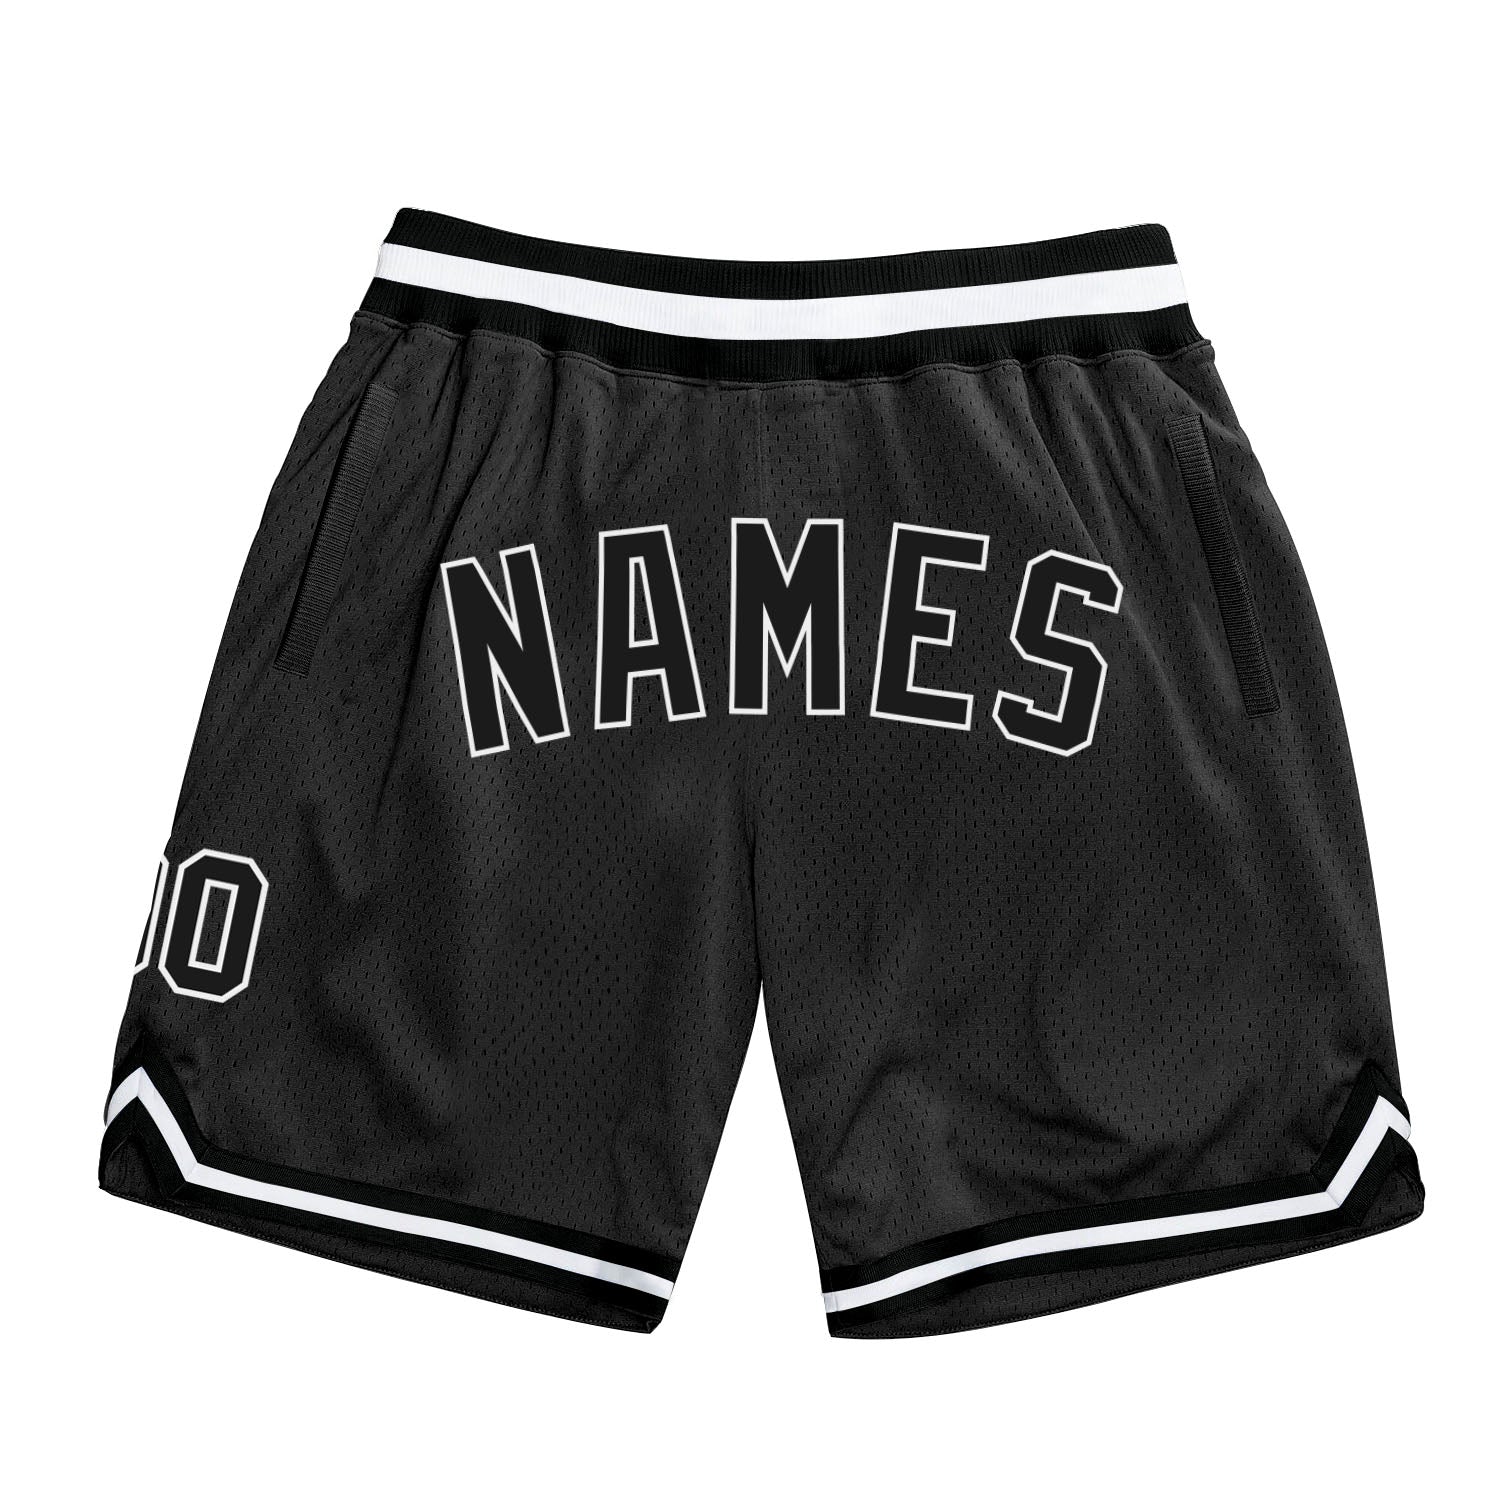 Custom Gold Black-White Authentic Throwback Basketball Jersey – Fiitg